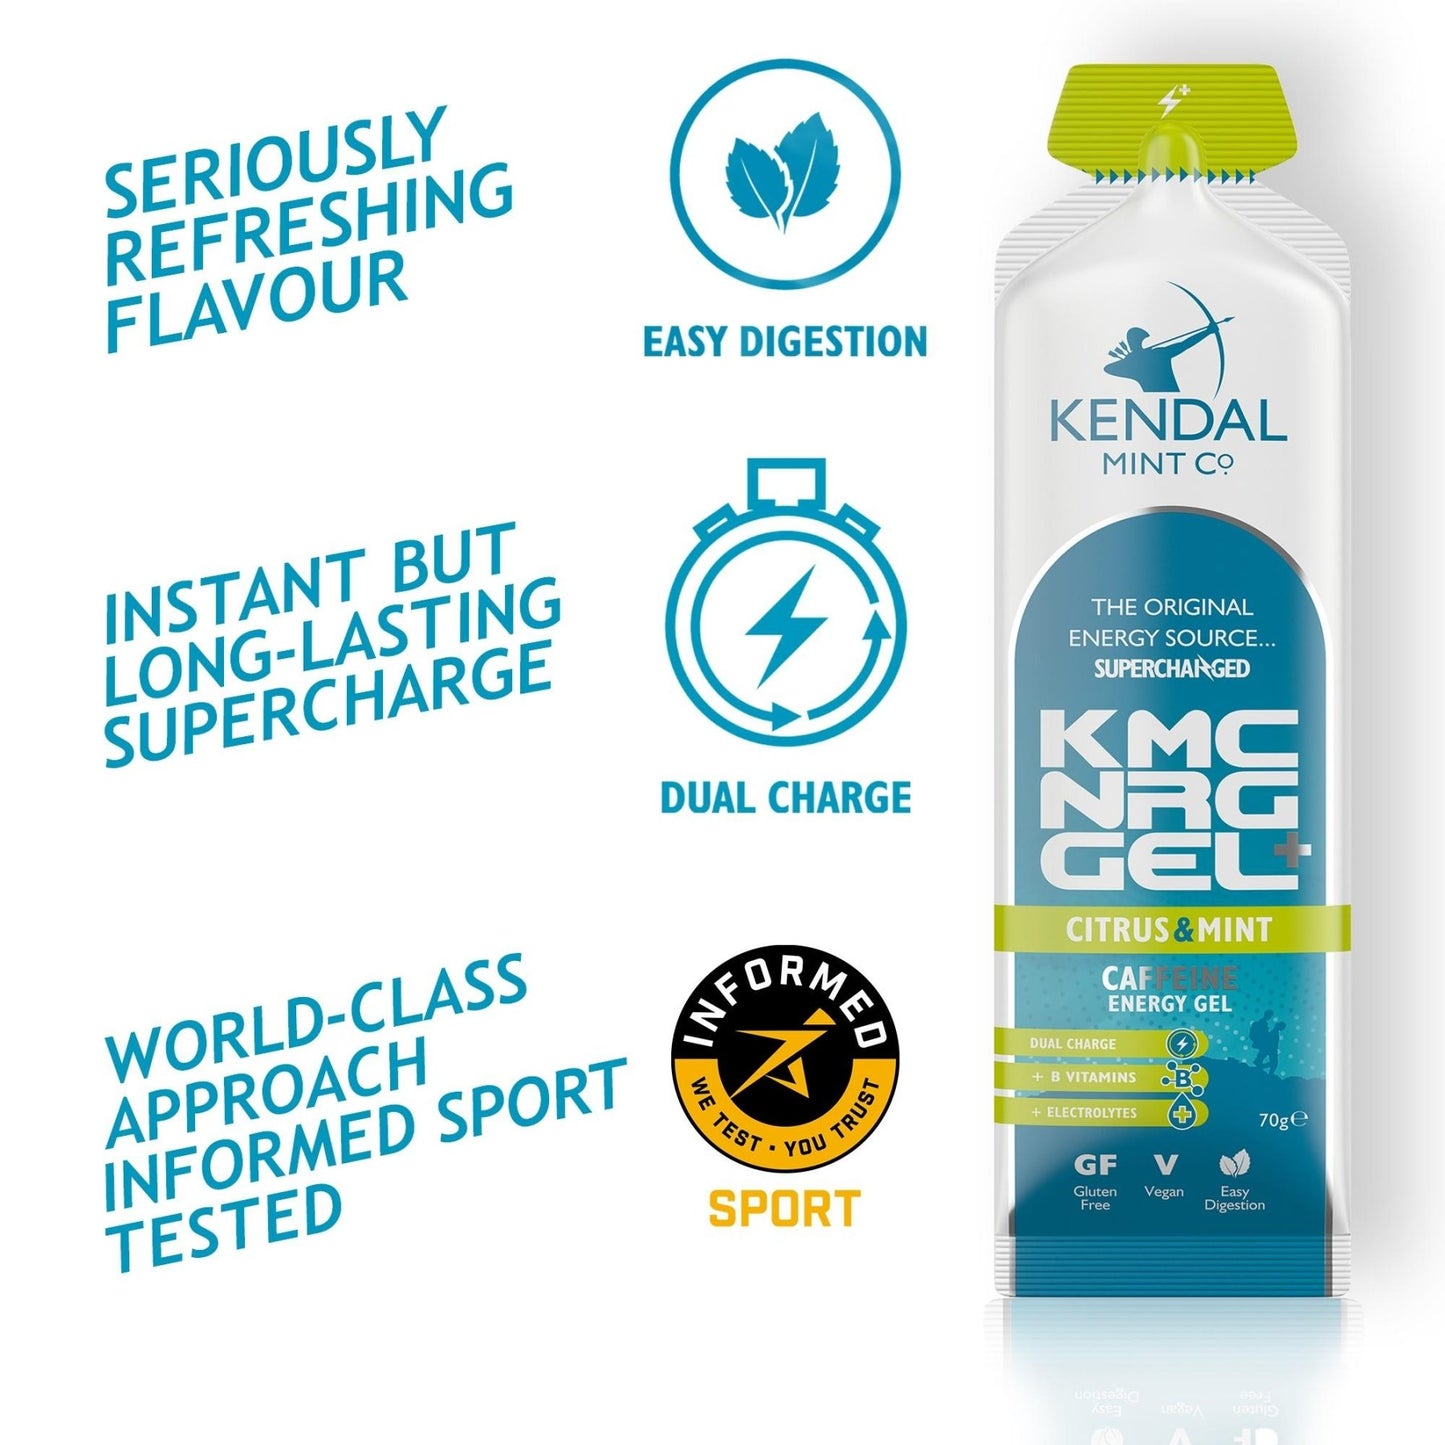 KMC NRG GEL+ Citrus & Mint Caffeine Energy Gel 70g - KMC NRG GEL - Kendal Mint Co® - 12 x 70g